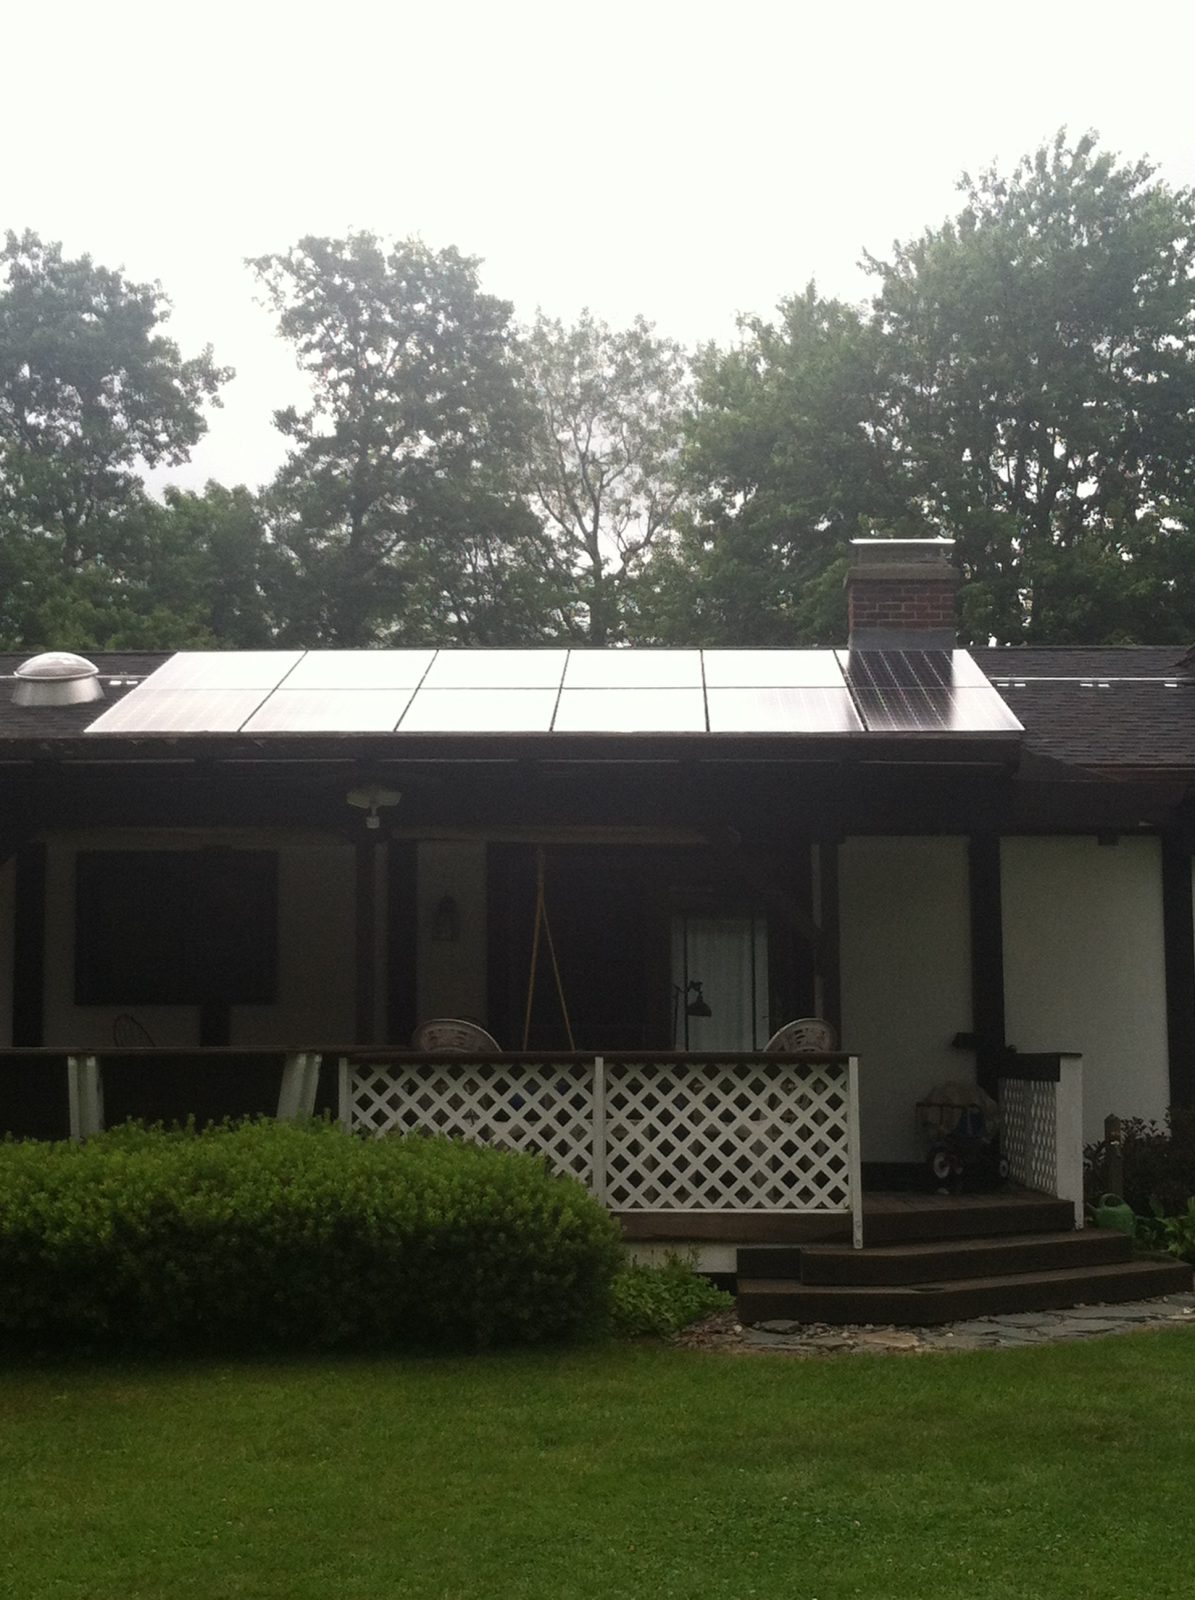 Deane Dudley Jericho Rooftop Solar Array